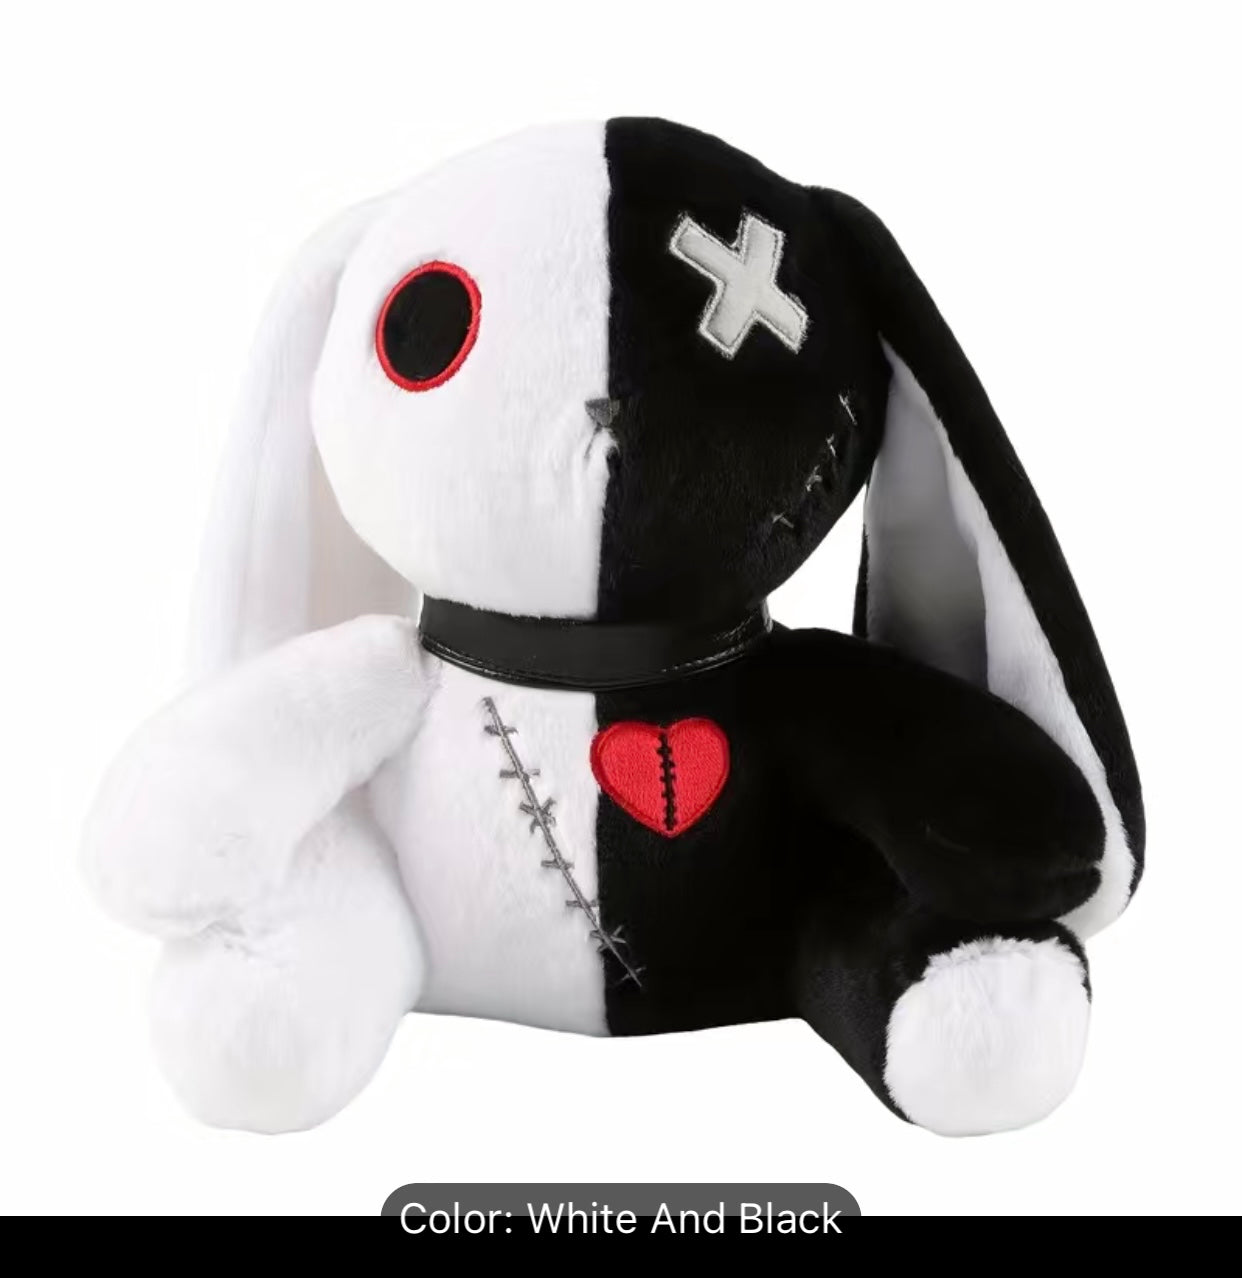 Black/white, Red/Black, Pink/Black goth bunny plushie